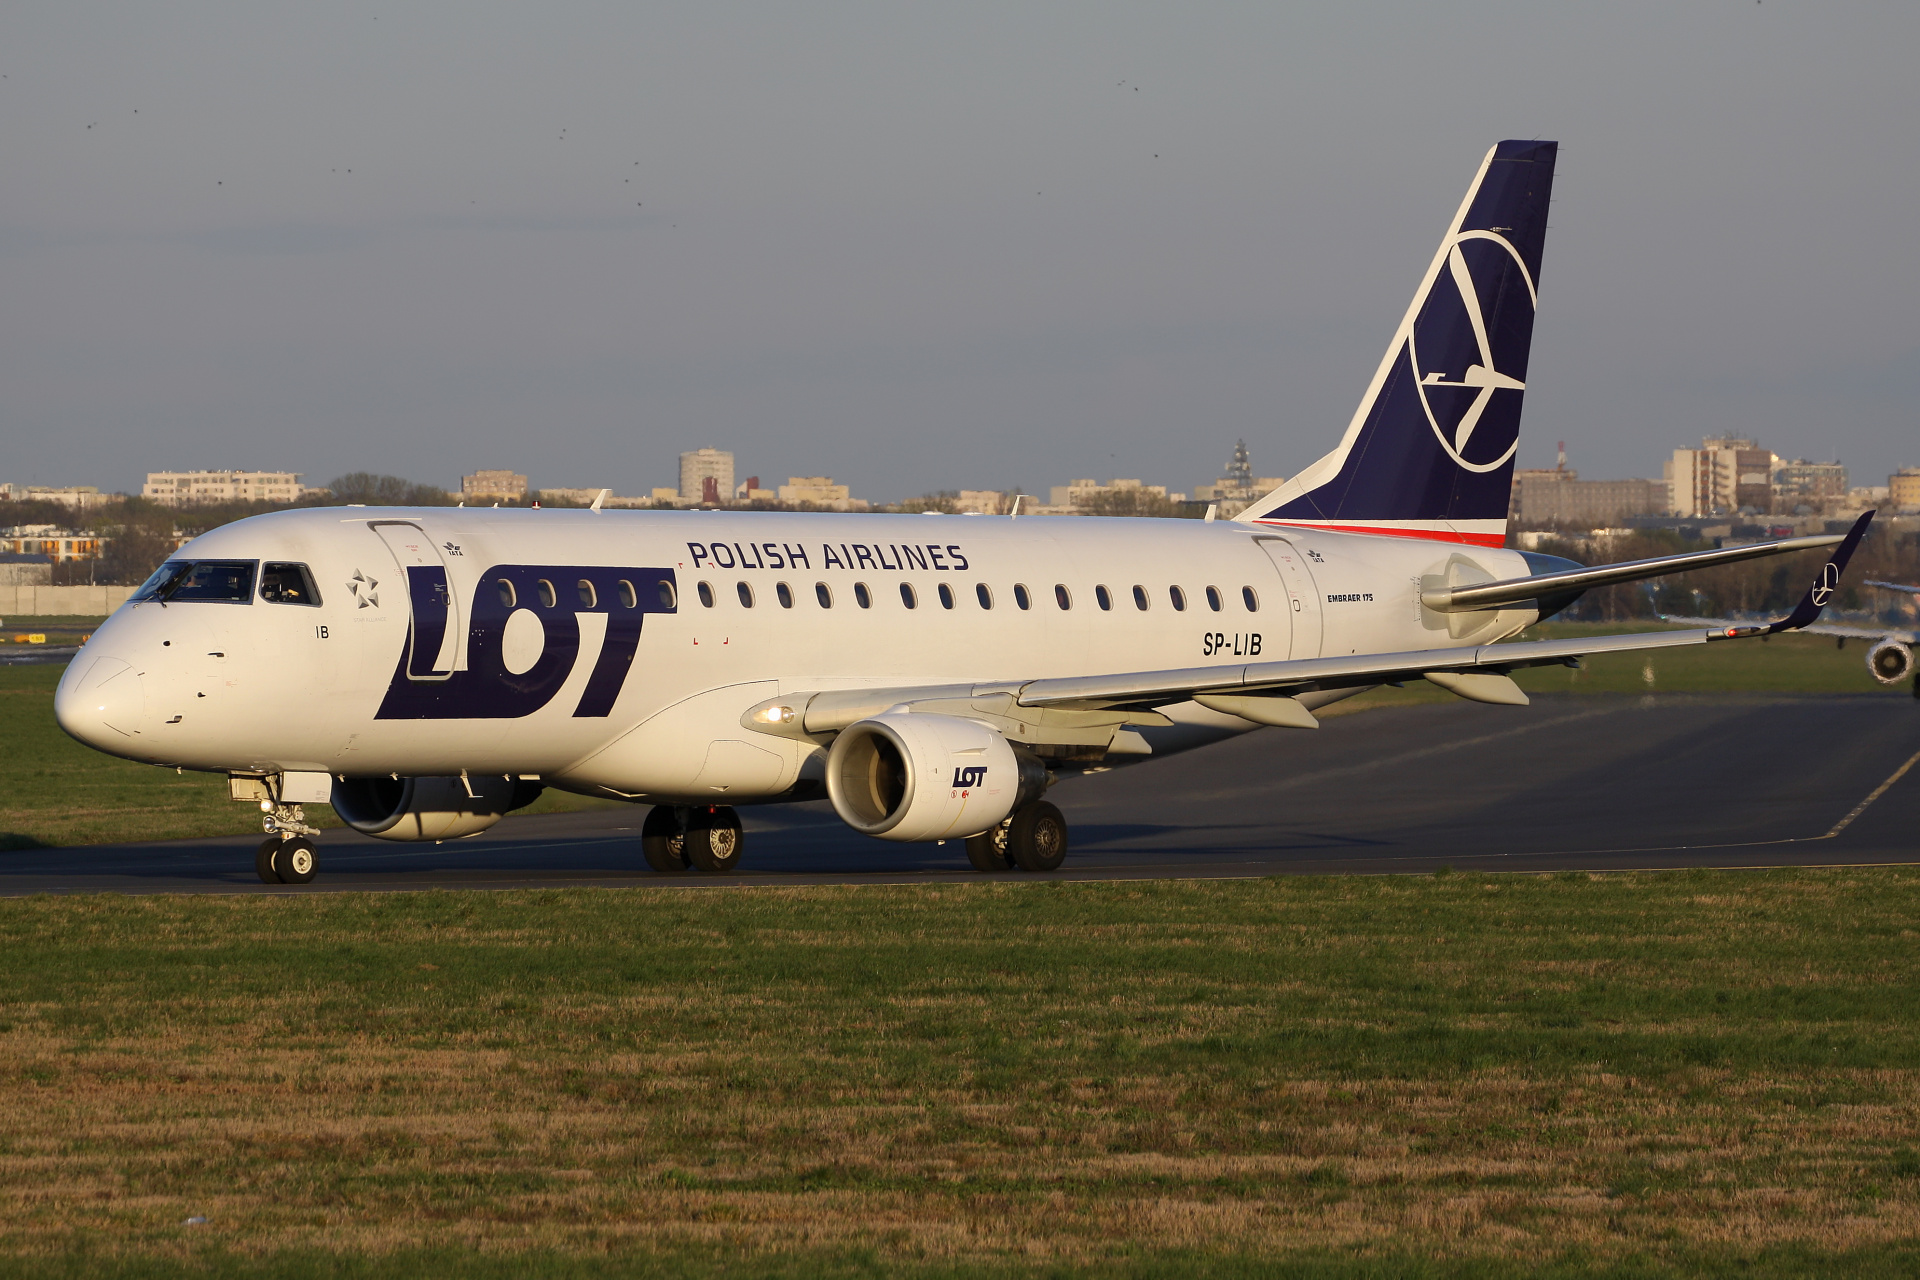 SP-LIB (new livery) (Aircraft » EPWA Spotting » Embraer E175 » LOT Polish Airlines)